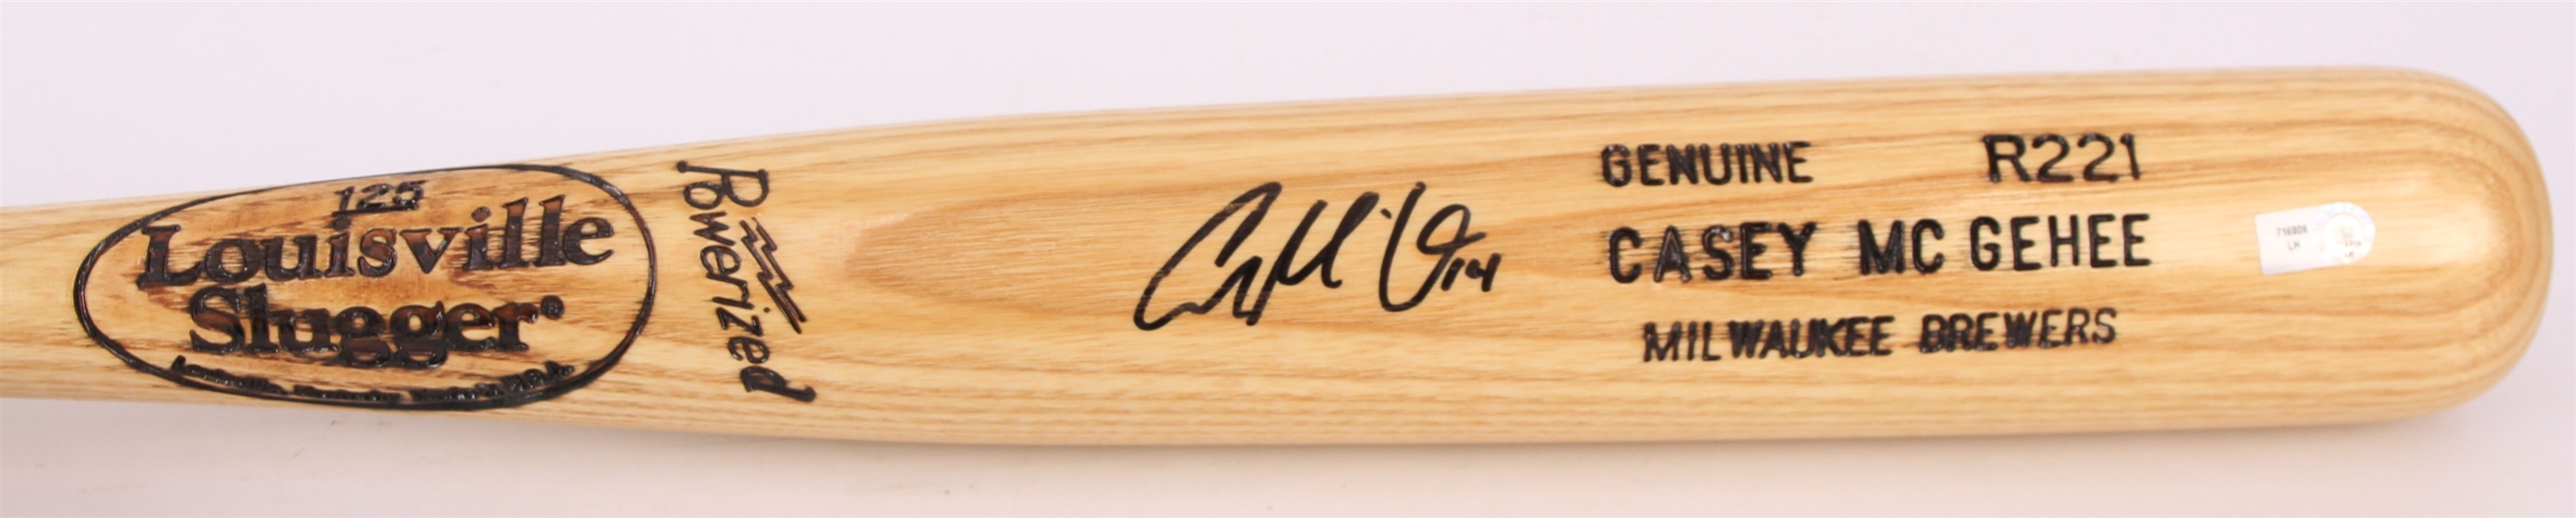 2009 Casey McGehee Milwaukee Brewers Signed Louisville Slugger Professional Model Bat (MEARS LOA/JSA/MLB Hologram)